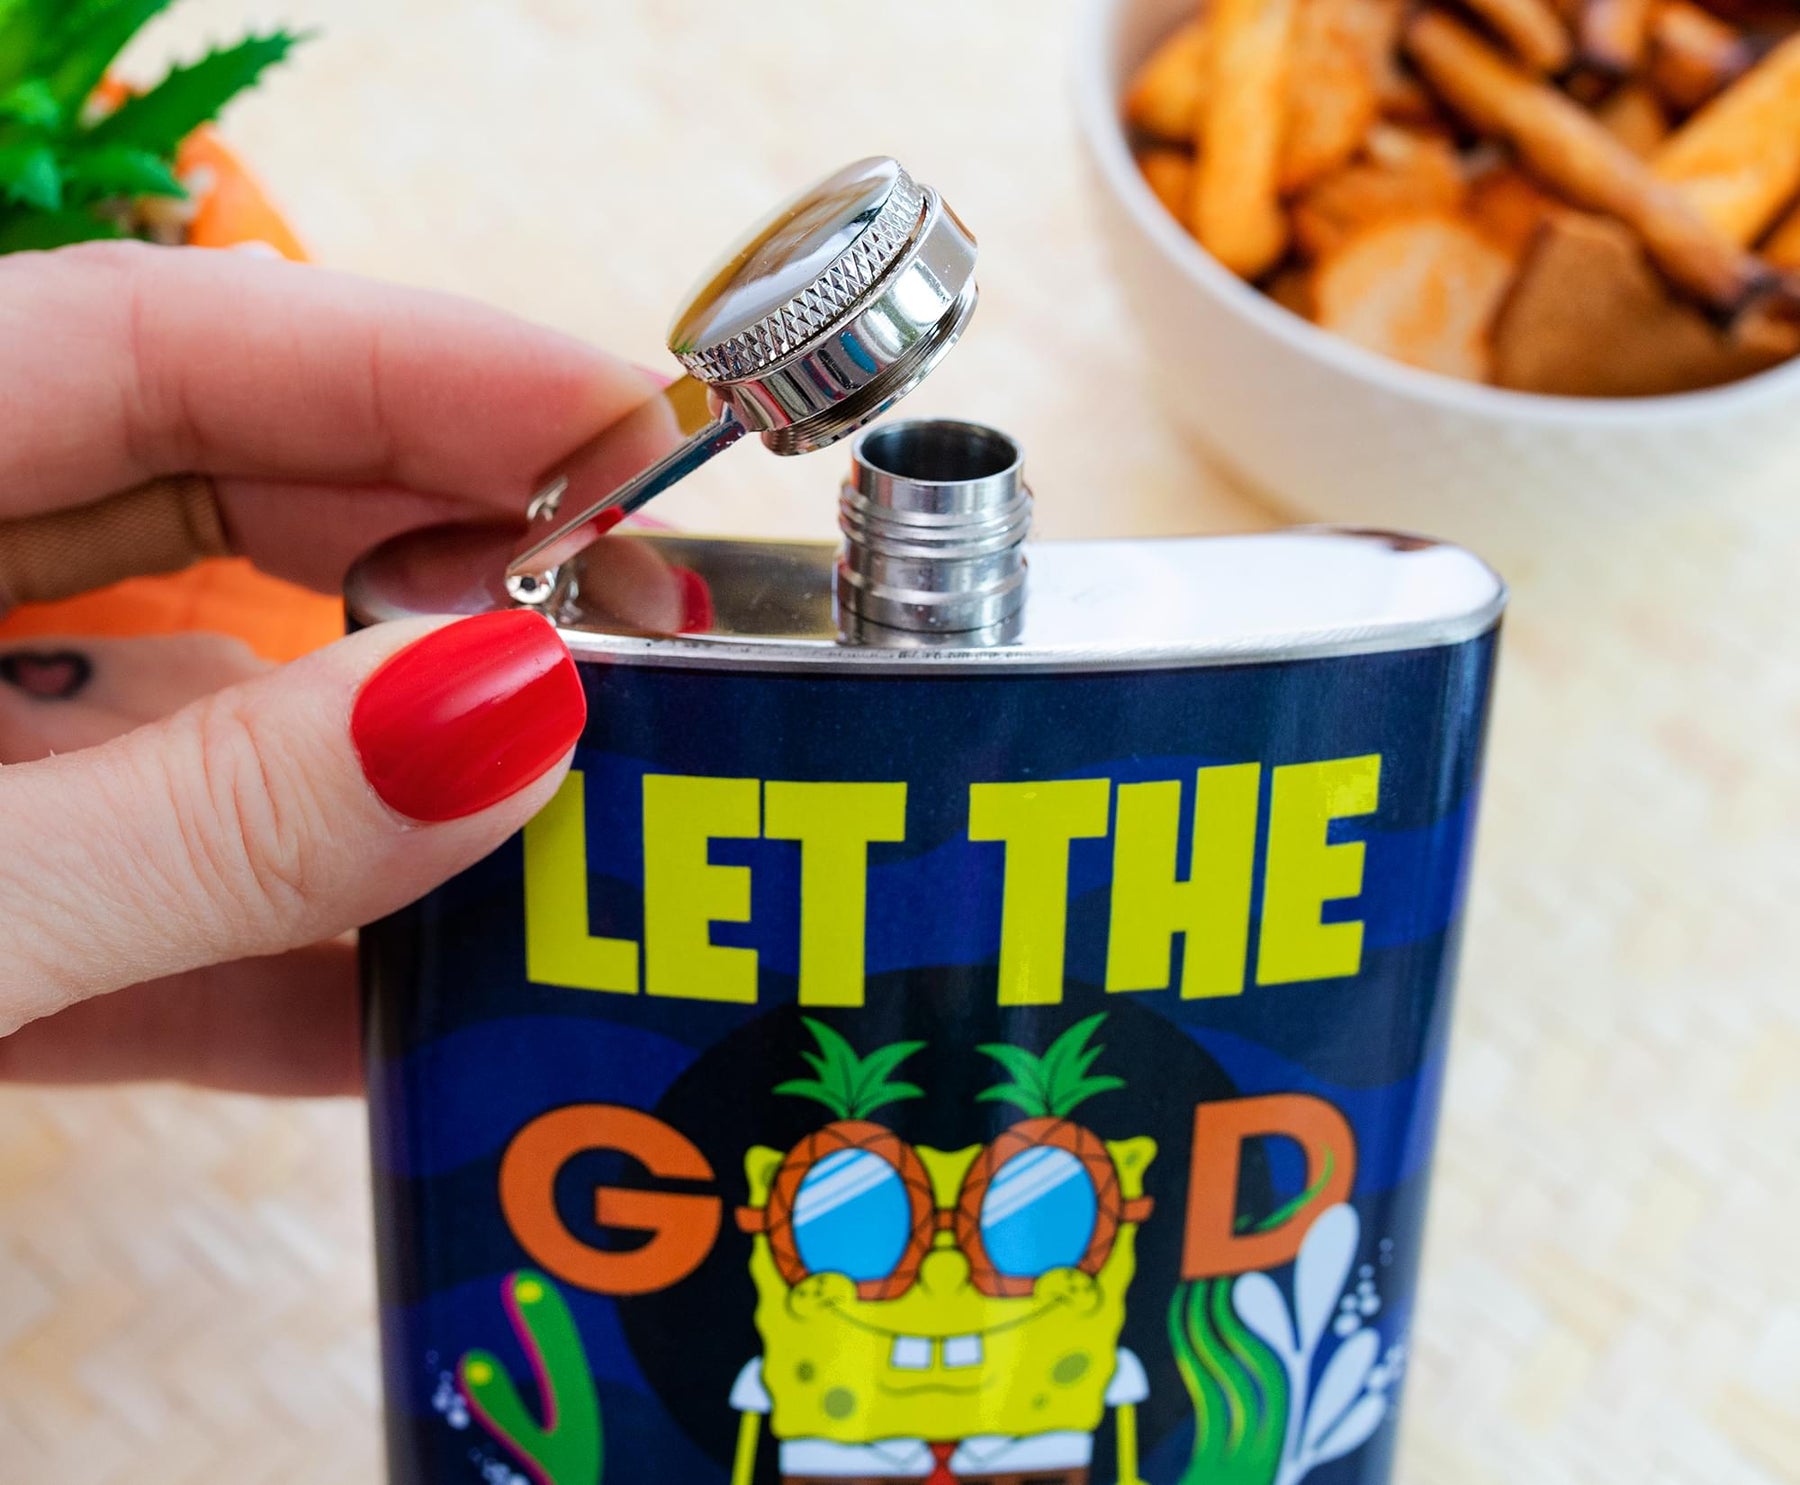 SpongeBob SquarePants "Mister Good Times" Stainless Steel Flask | Holds 7 Ounces